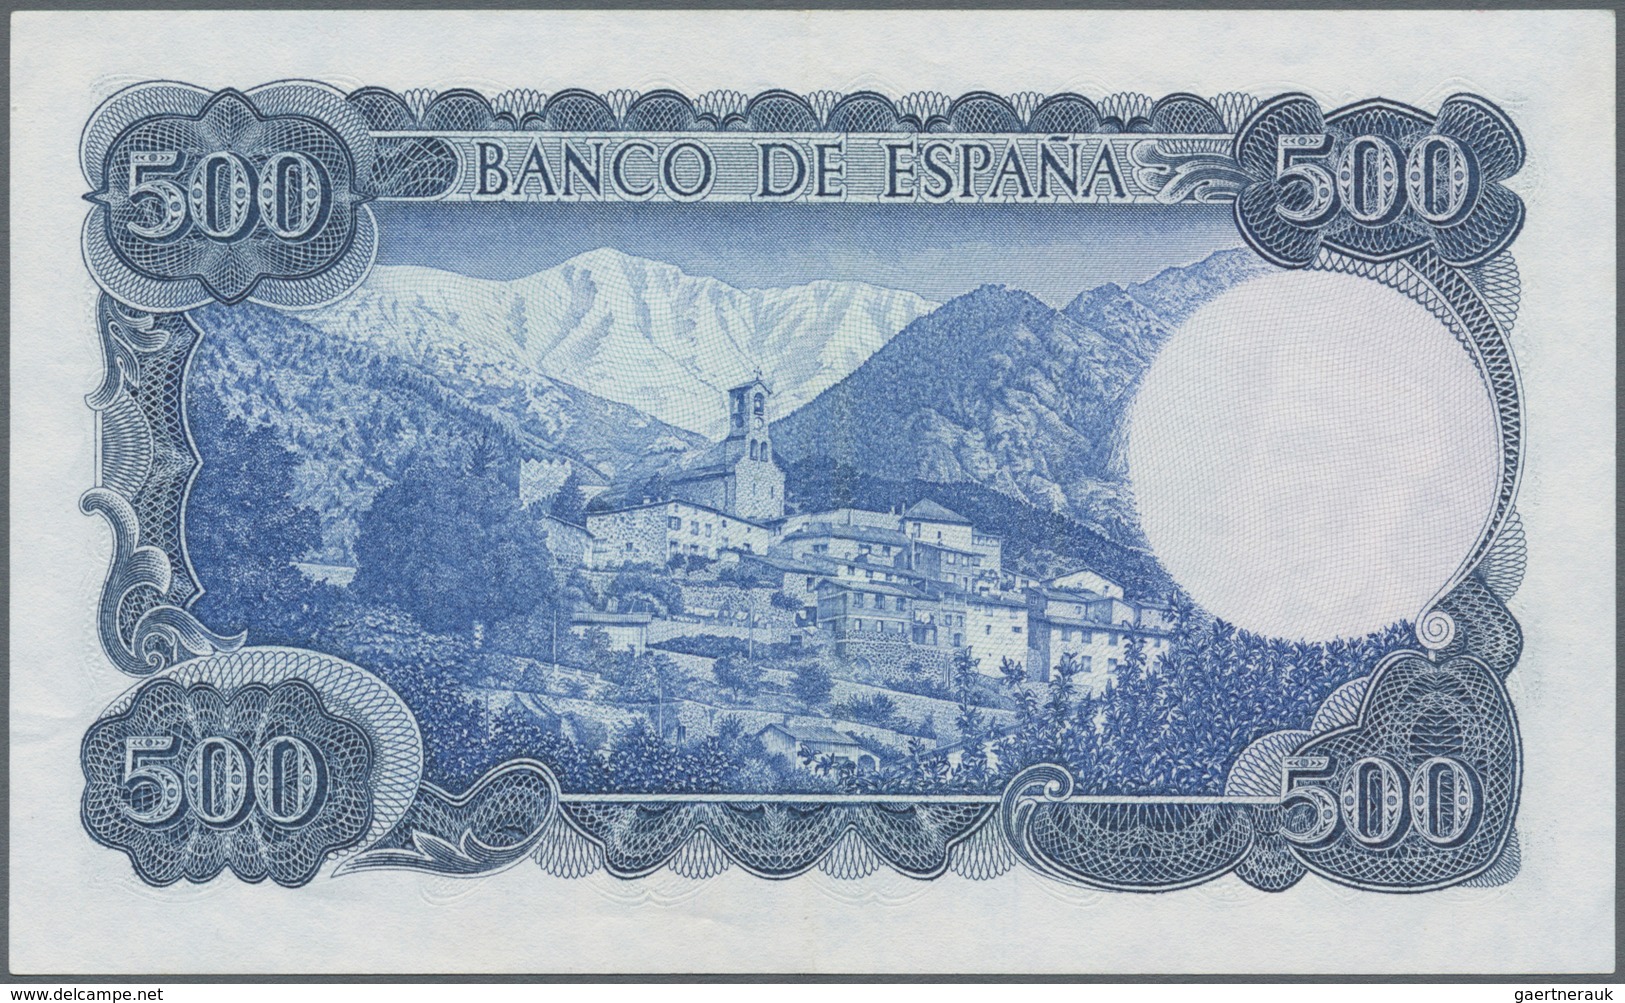 Spain / Spanien: Banco de España: Set of 7 different banknotes containing 1 Peseta 1951 P. 139a (UNC